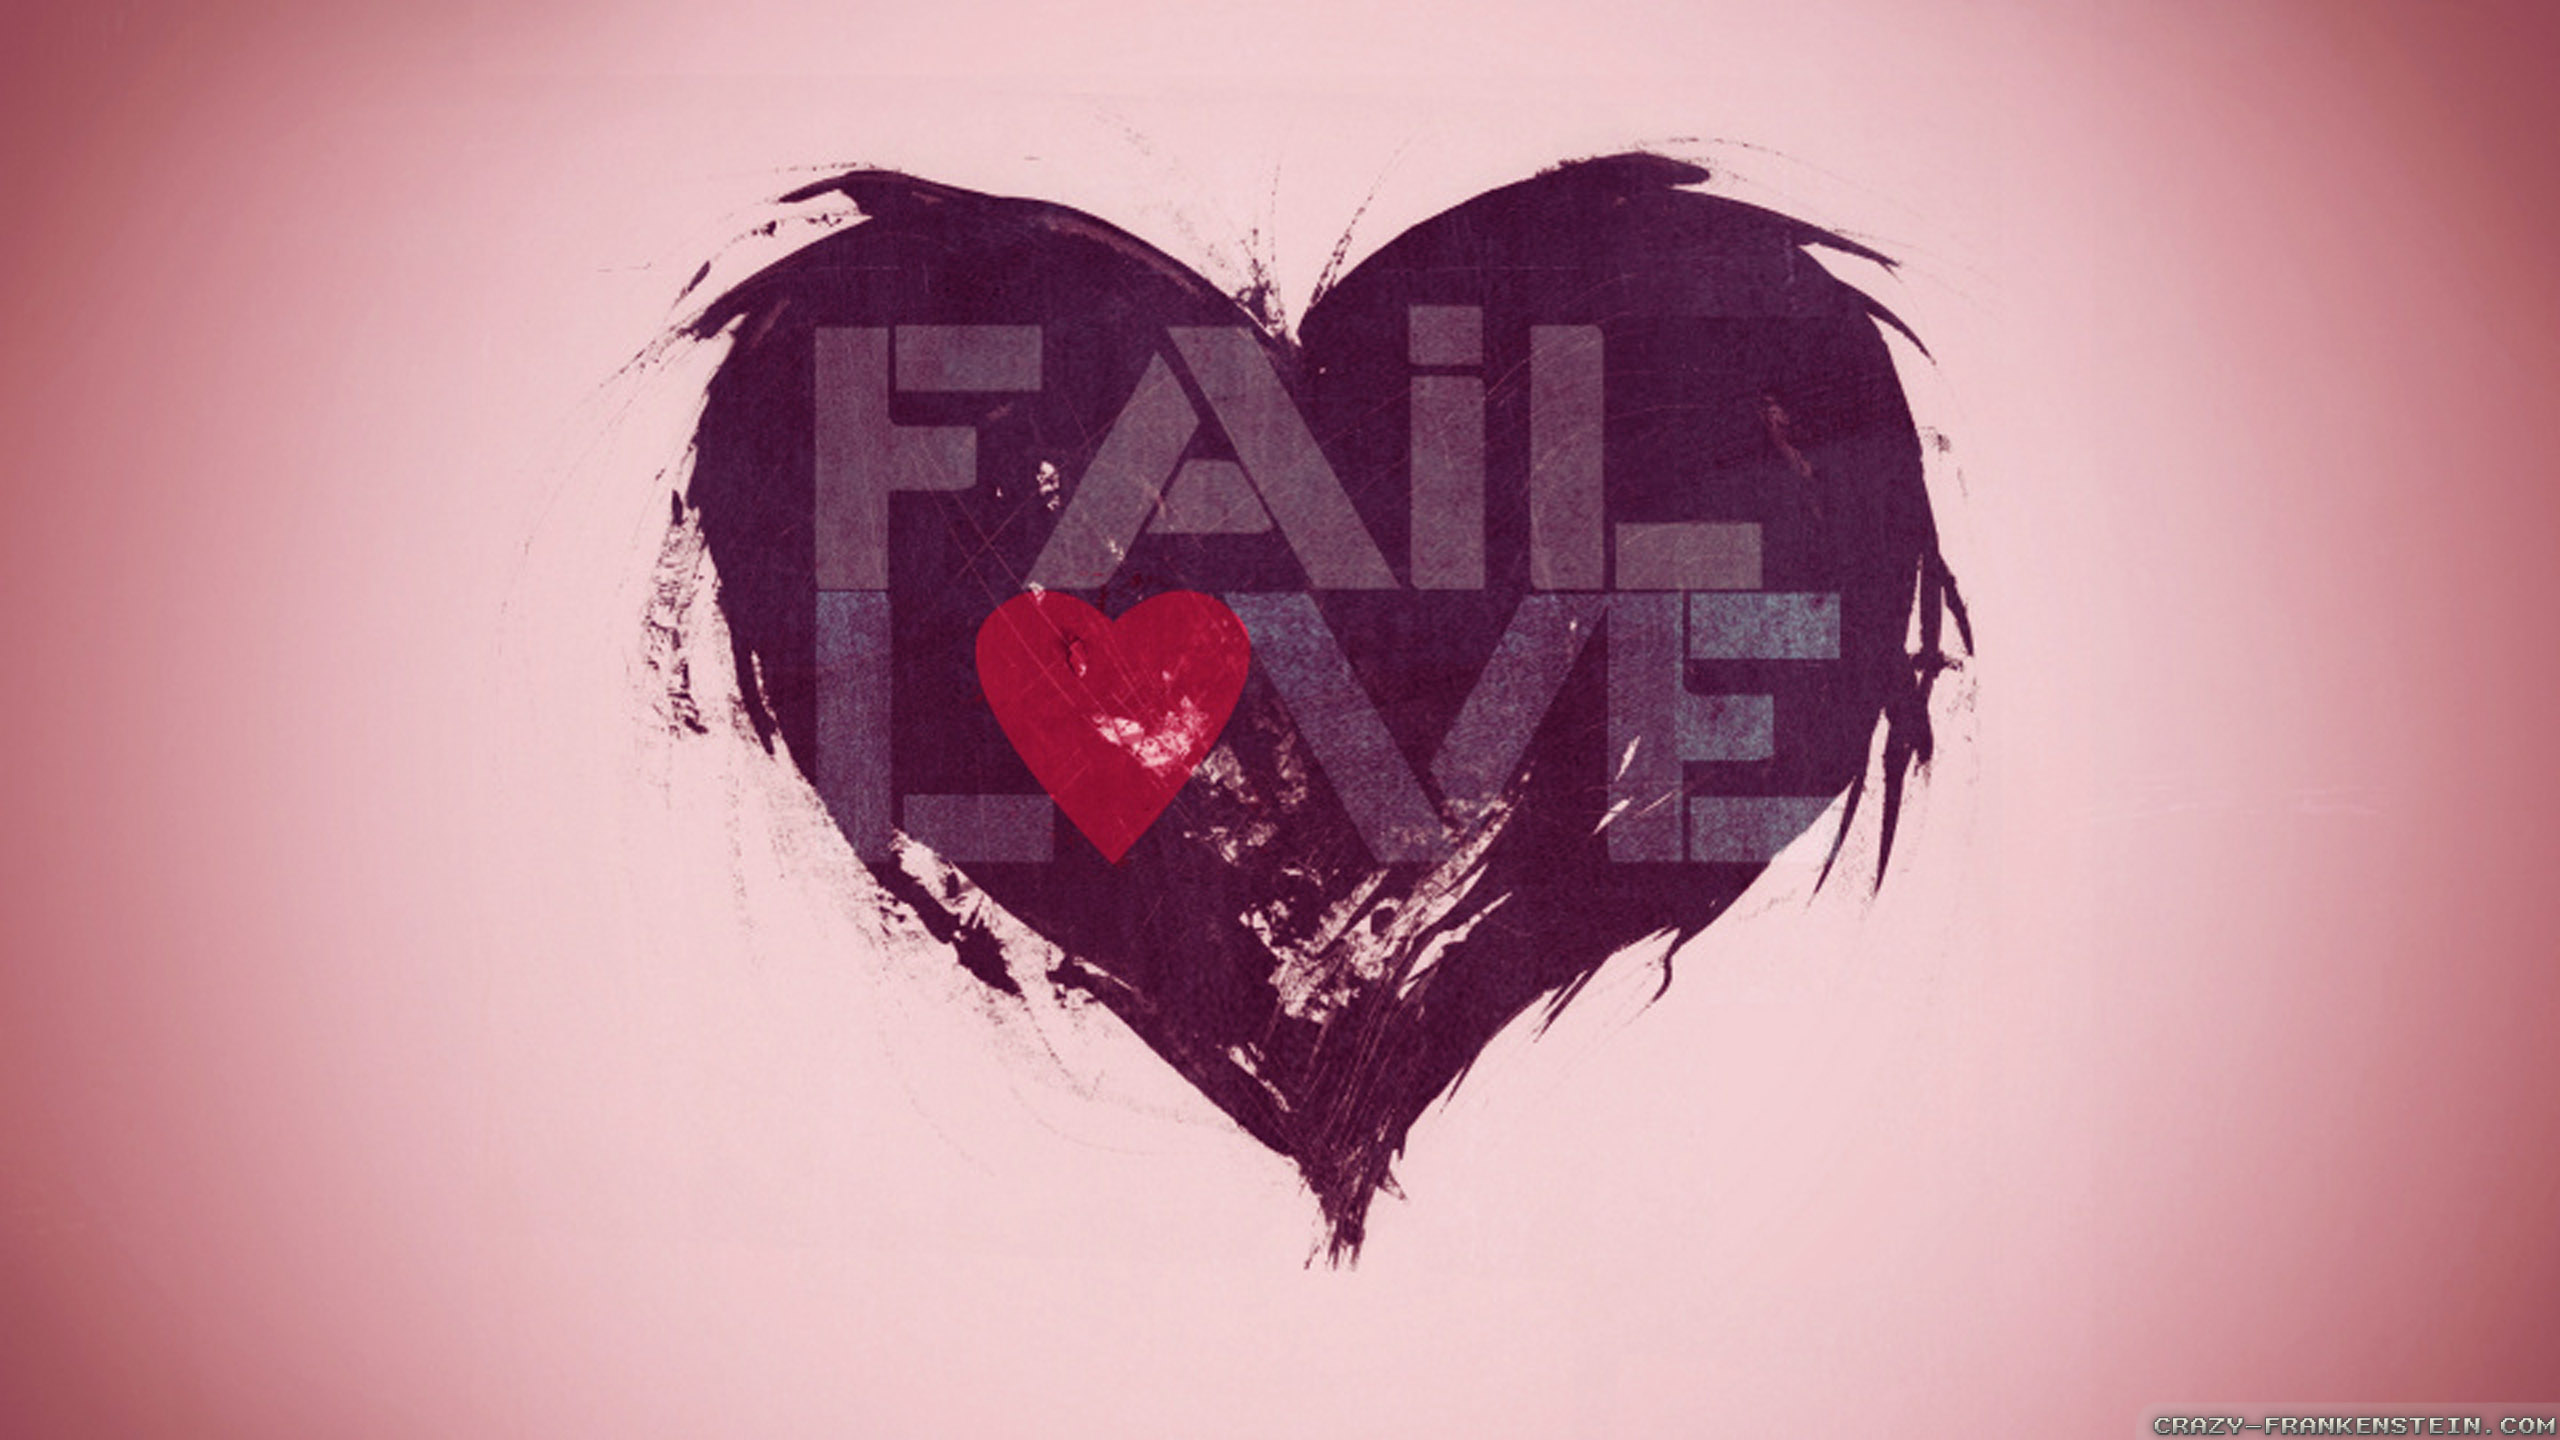 Yes I M Love Failure - HD Wallpaper 